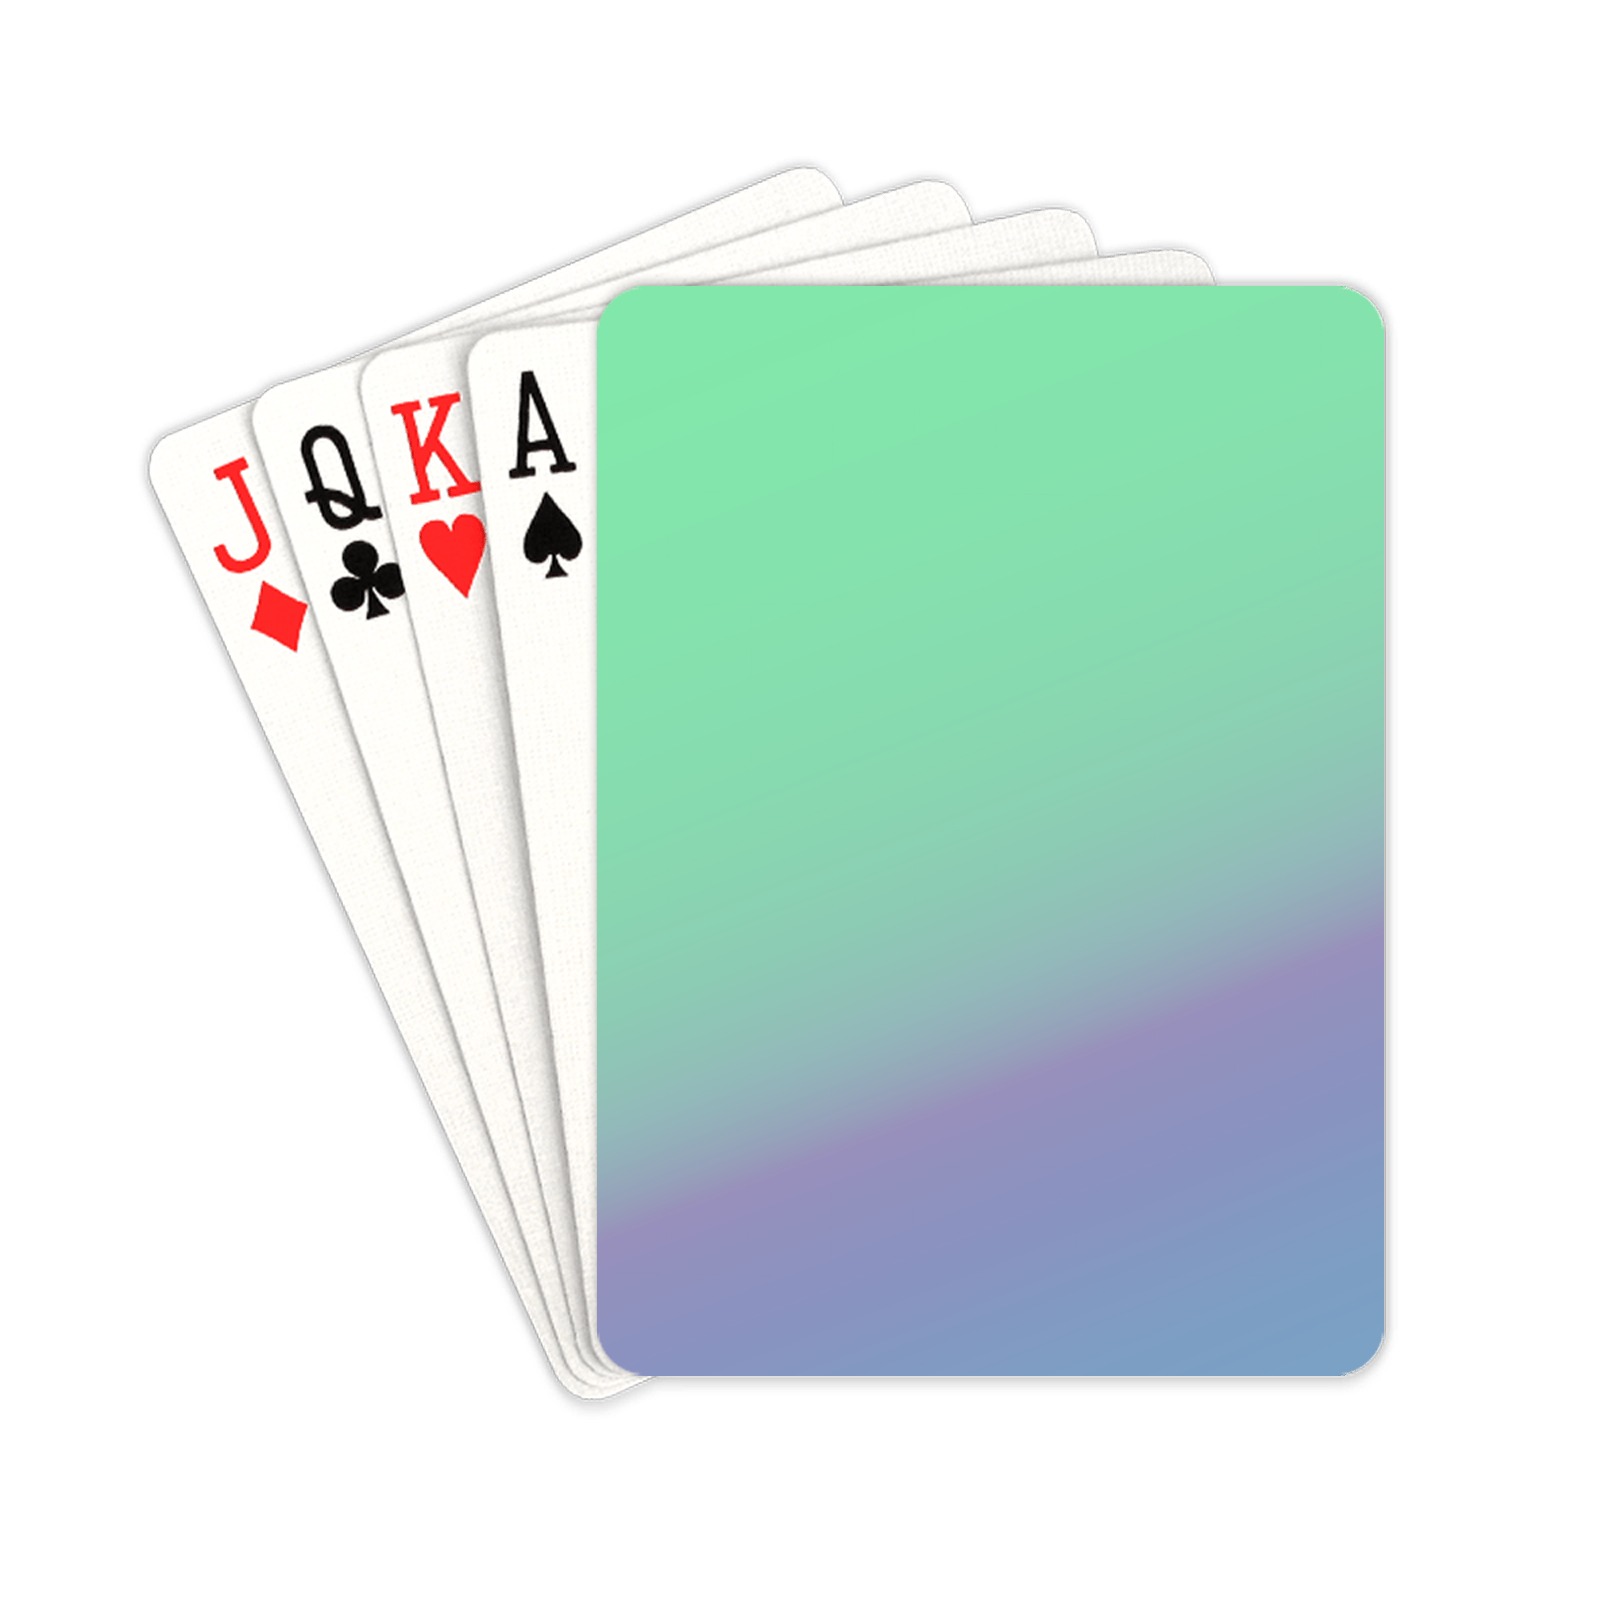 blu grn Playing Cards 2.5"x3.5"